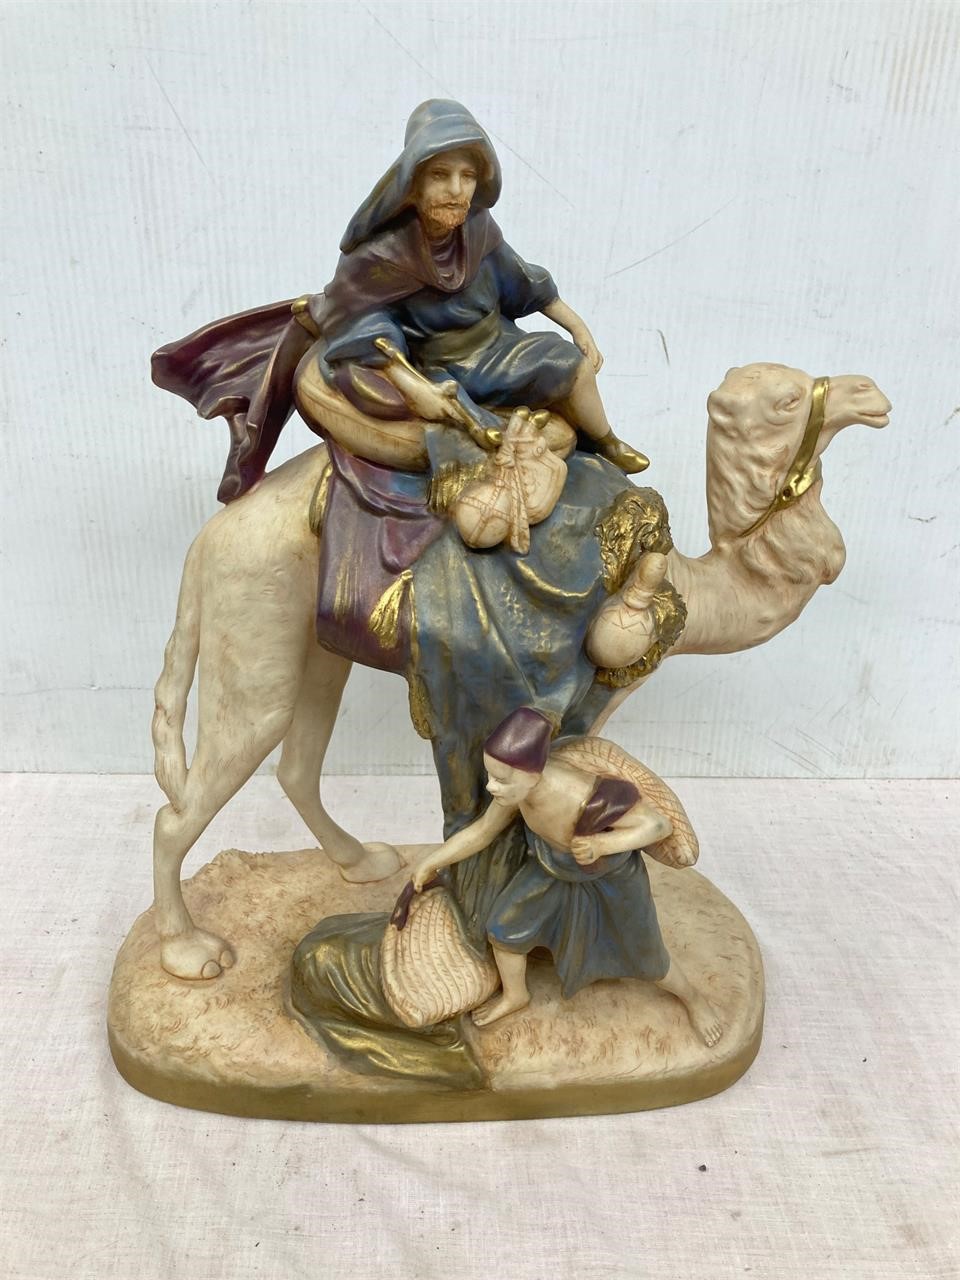 Camel figurine. 18” tall